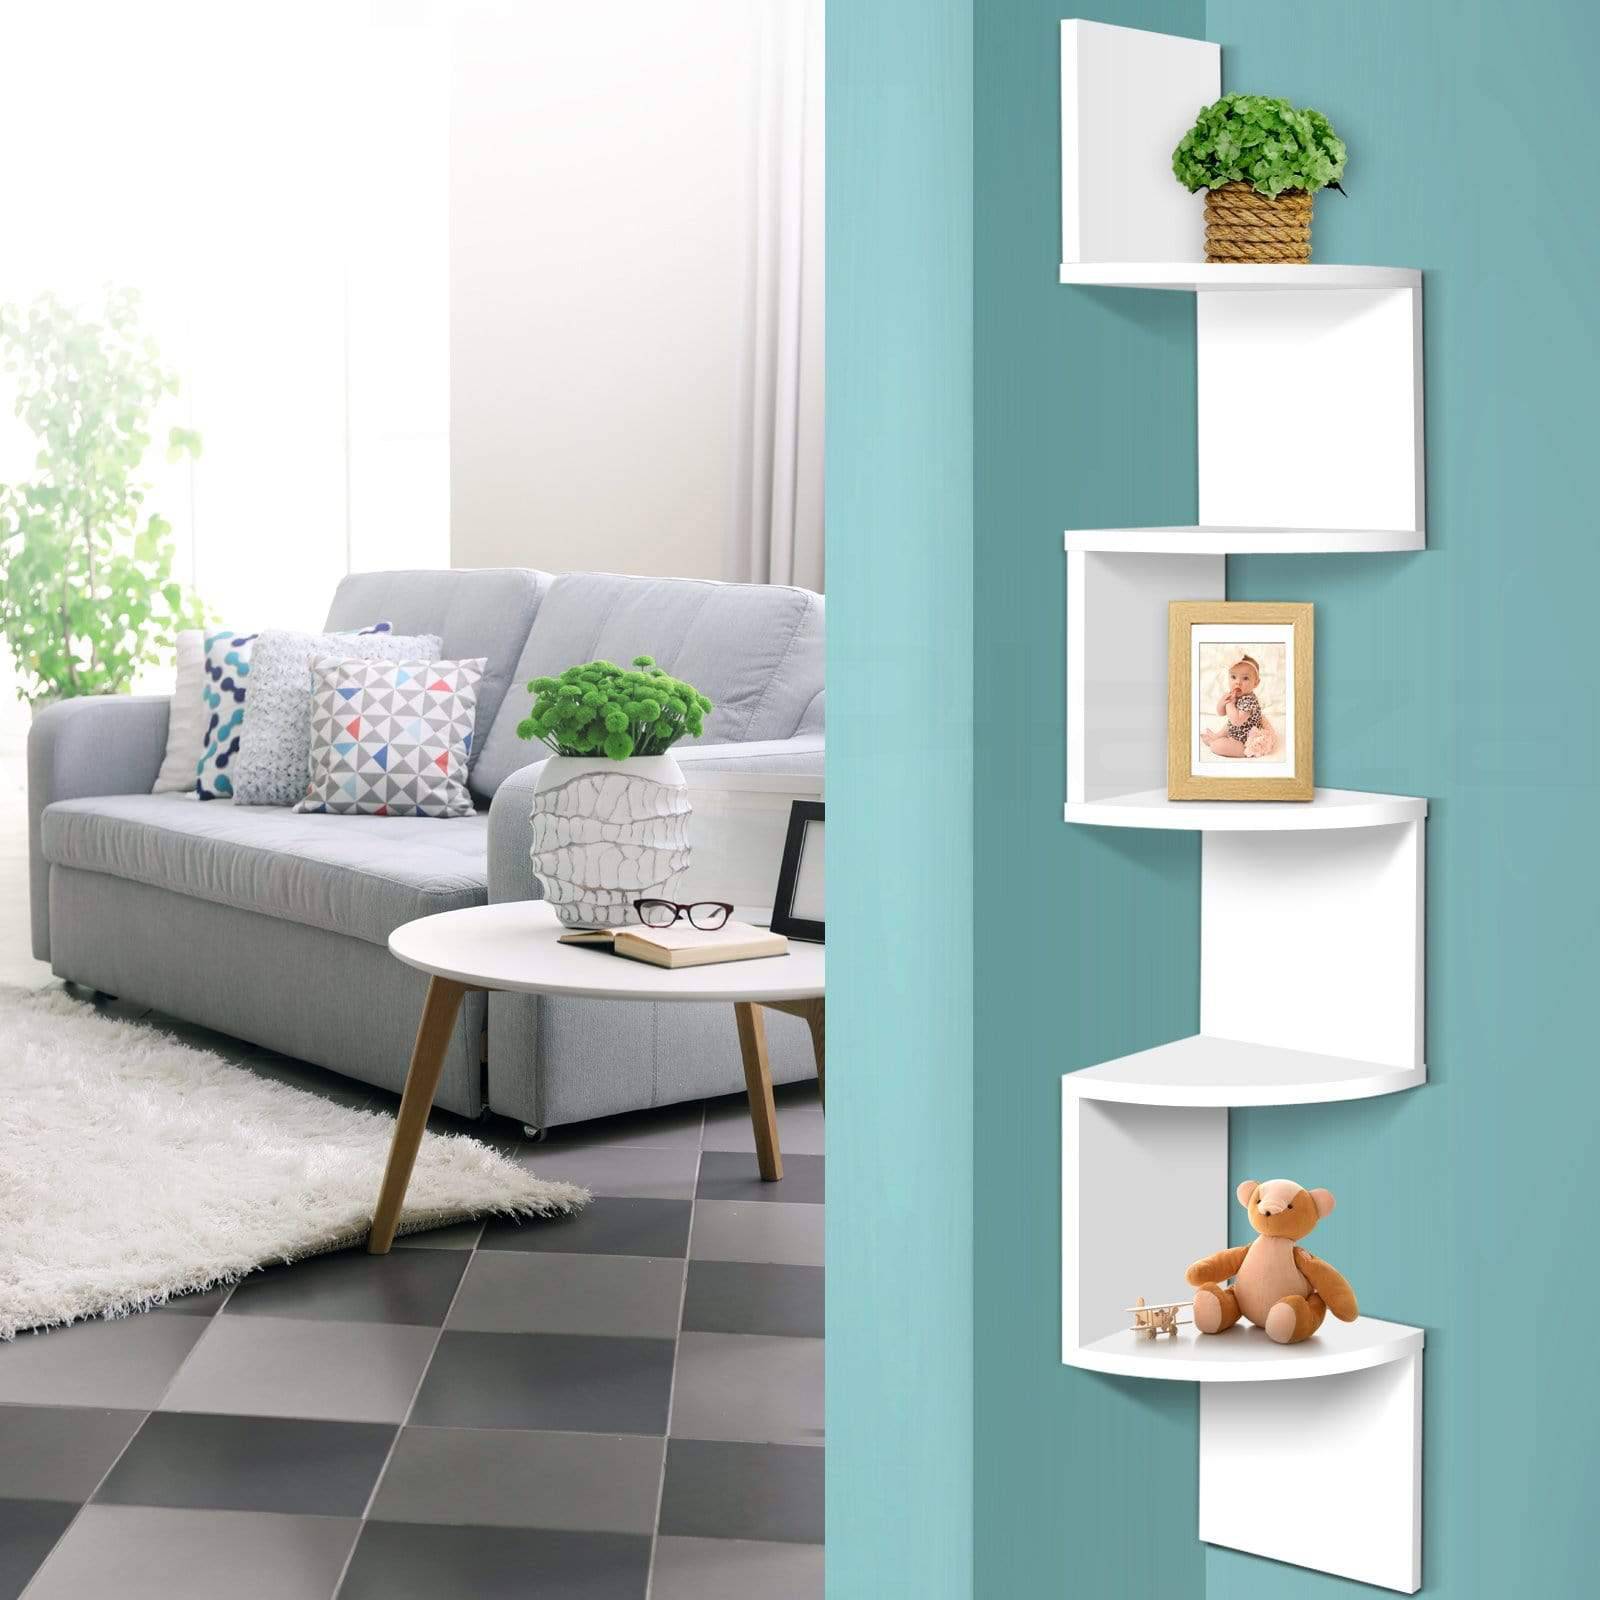 Artiss 5 Tier Corner Wall Shelf - White - Newstart Furniture